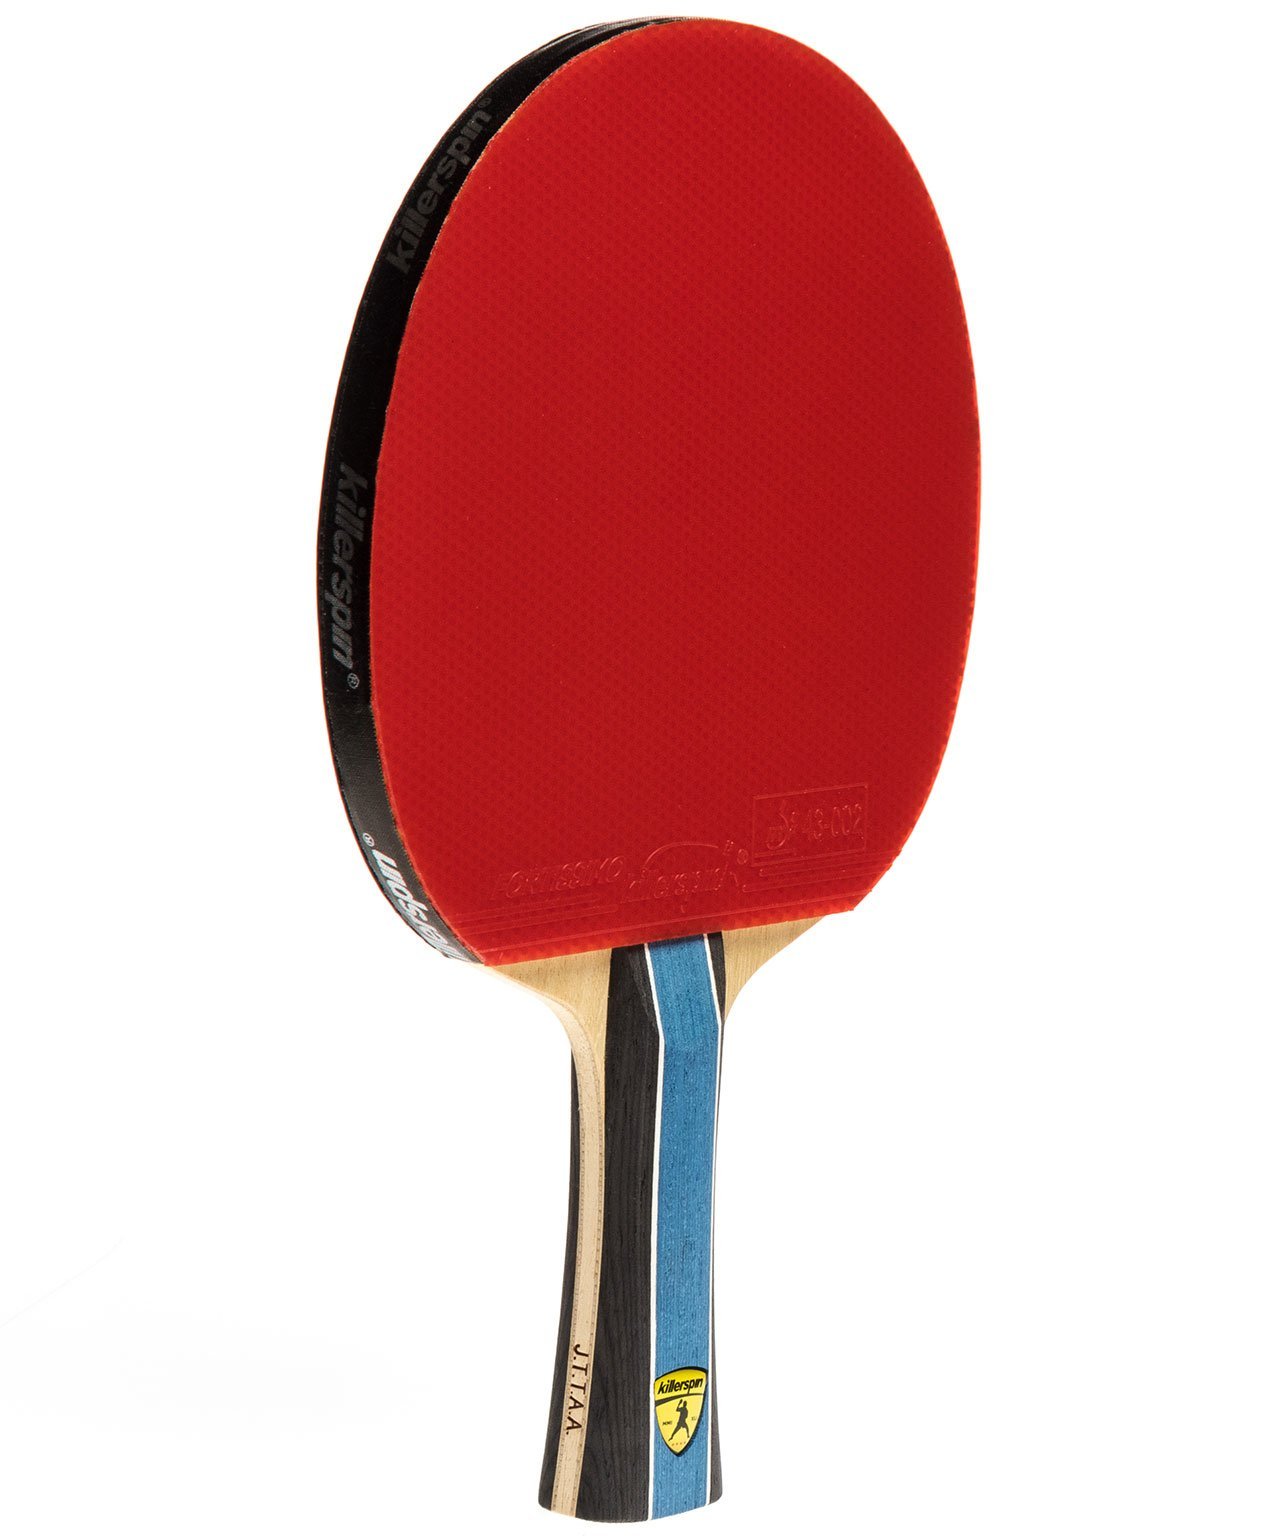 Killerspin Kido 5A RTG Premium Tennis Table Racket